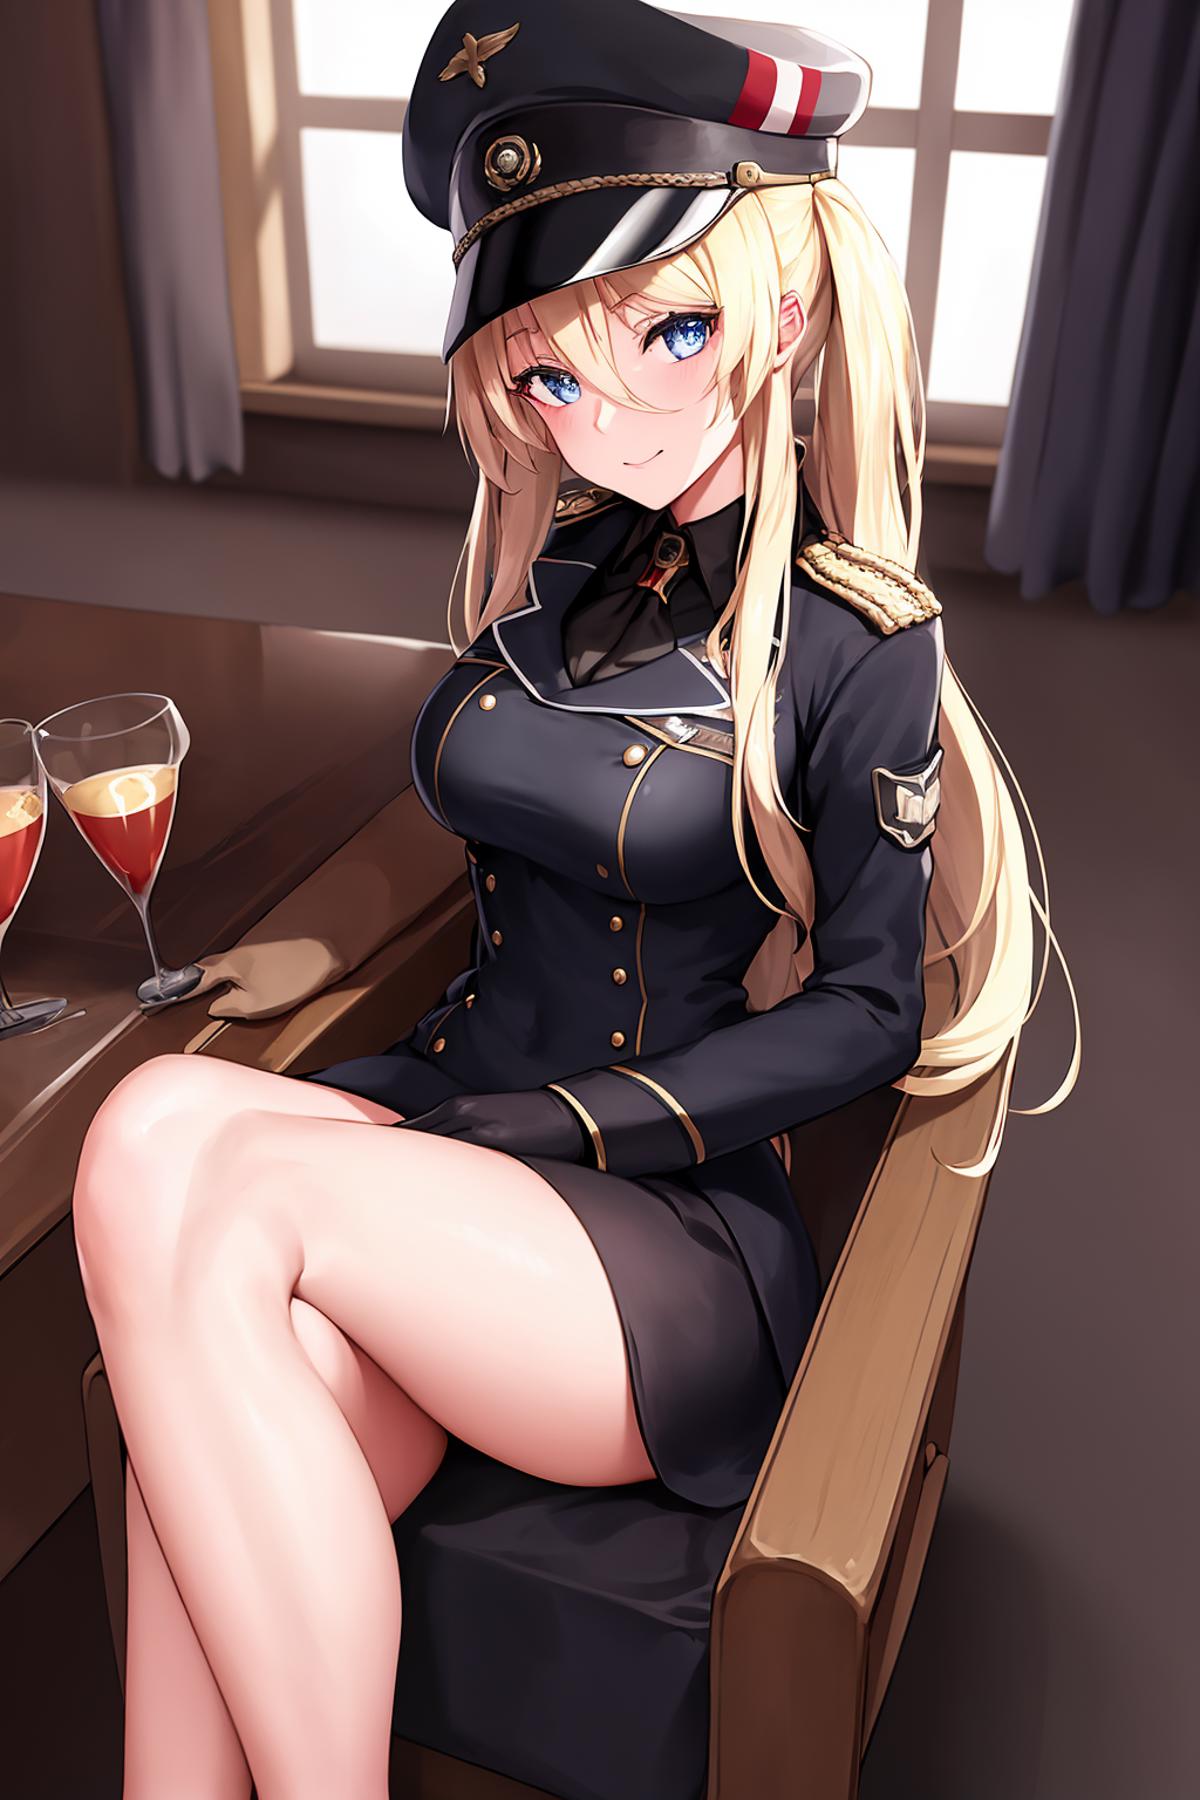 Bismarck loRA image by ForkY